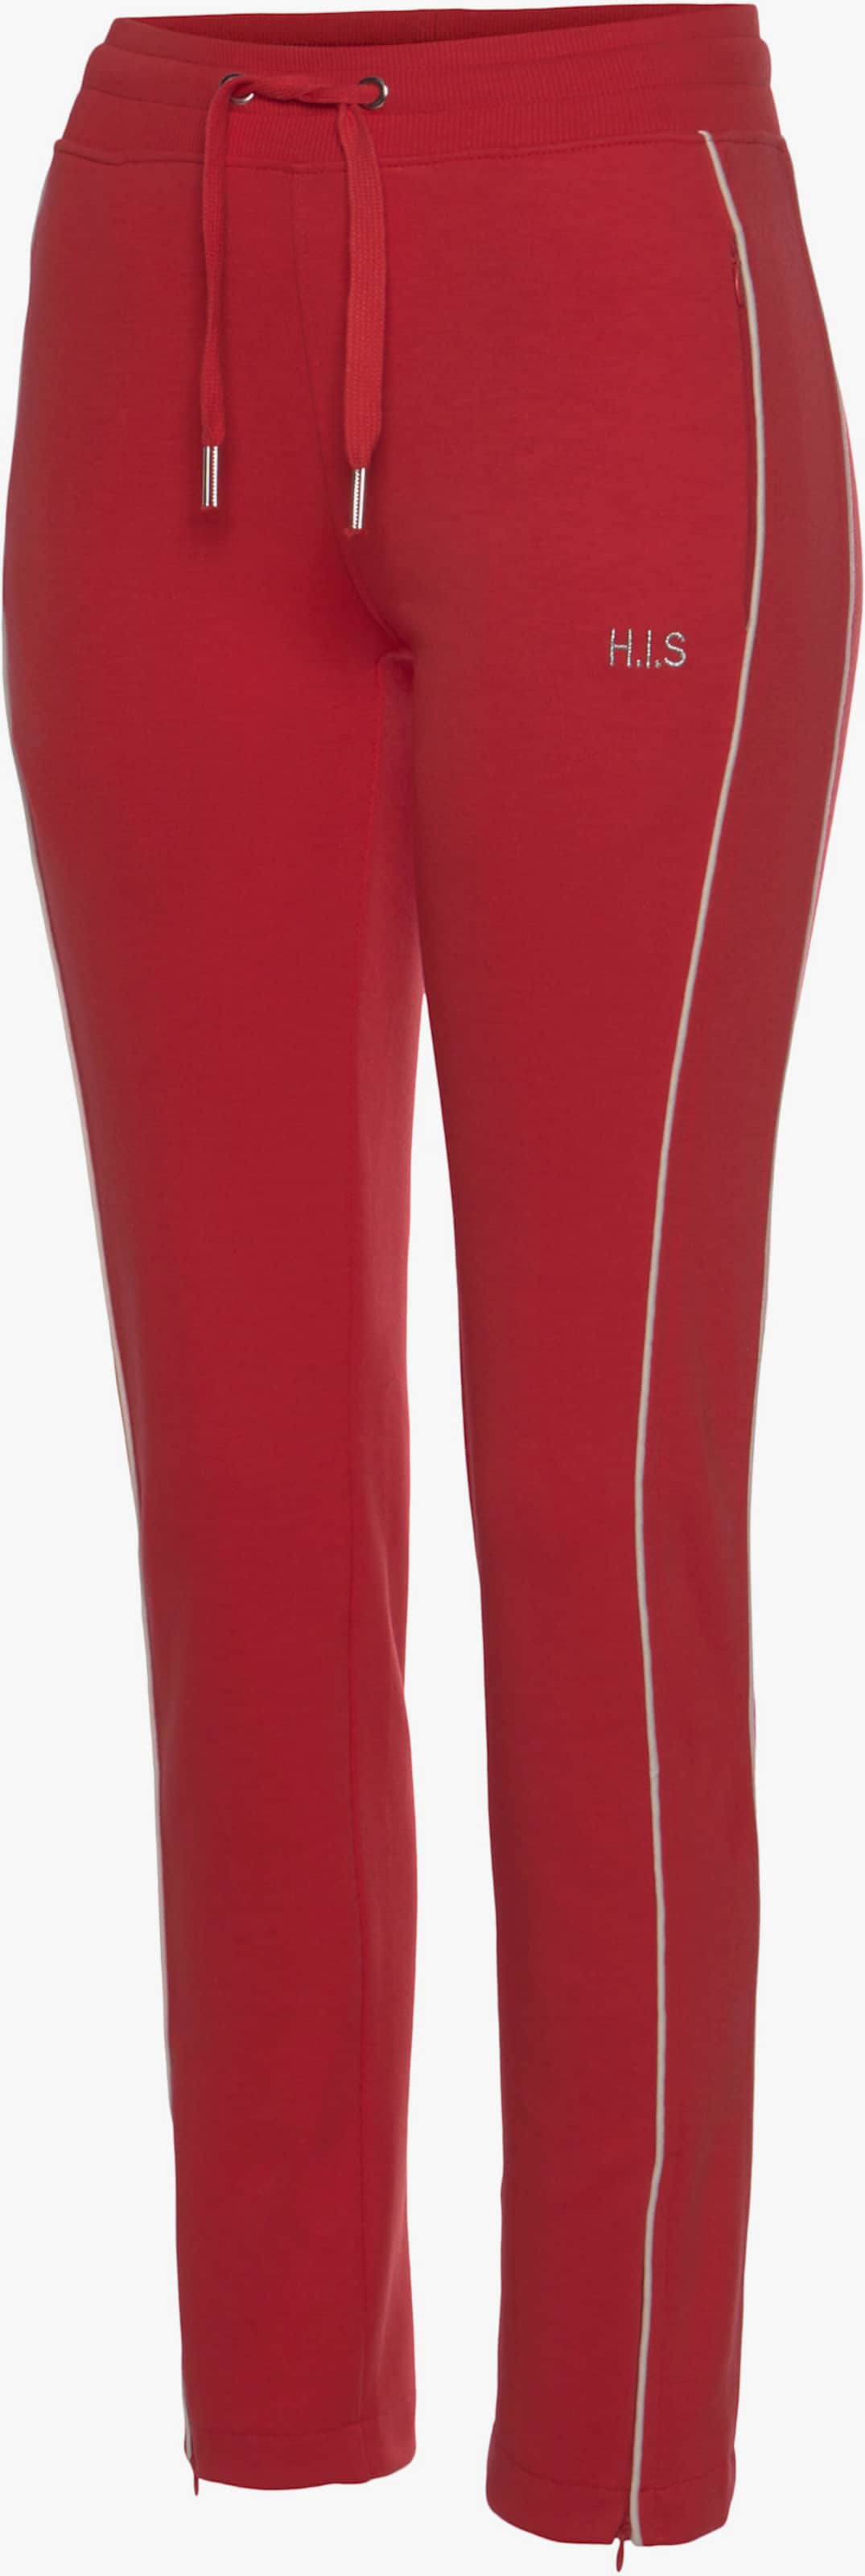 H.I.S Pantalon molletonné - rouge